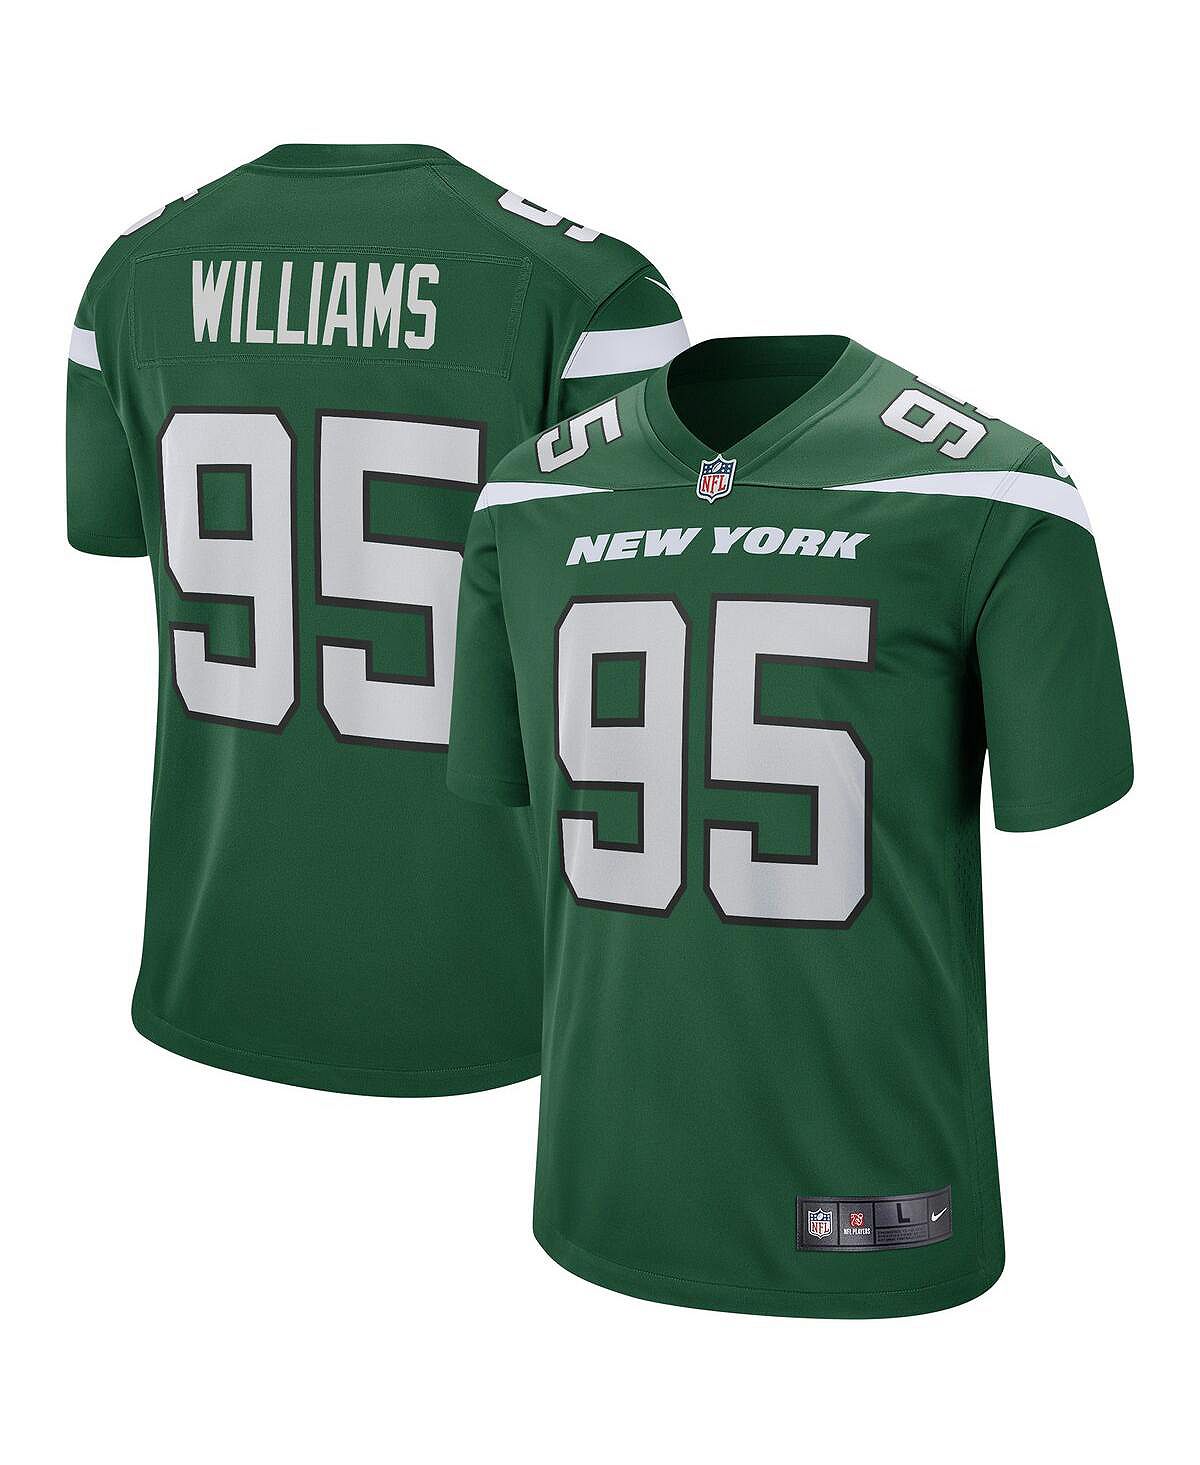 york Мужская футболка quinnen williams gotham green new york jets game джерси Nike, зеленый